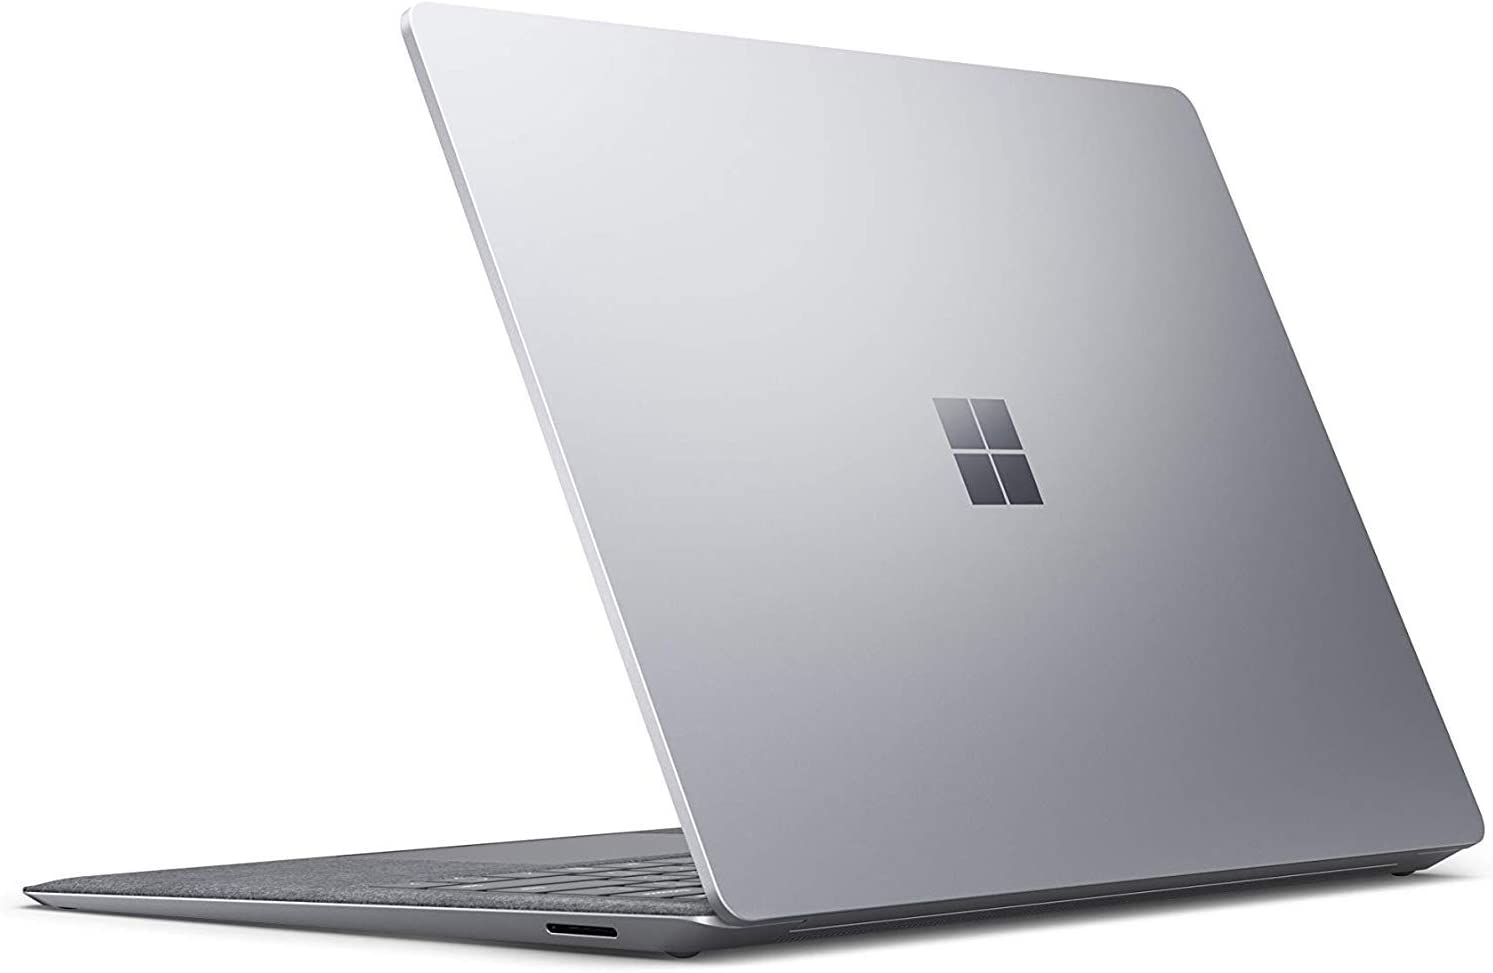 Microsoft Surface 3 Laptop [VGY-00013] Touch Screen, Intel Core i5-1035G7, 13.5 Inch, 128GB, 8GB RAM, Intel Iris Plus Graphics, Windows 10 - Renewed